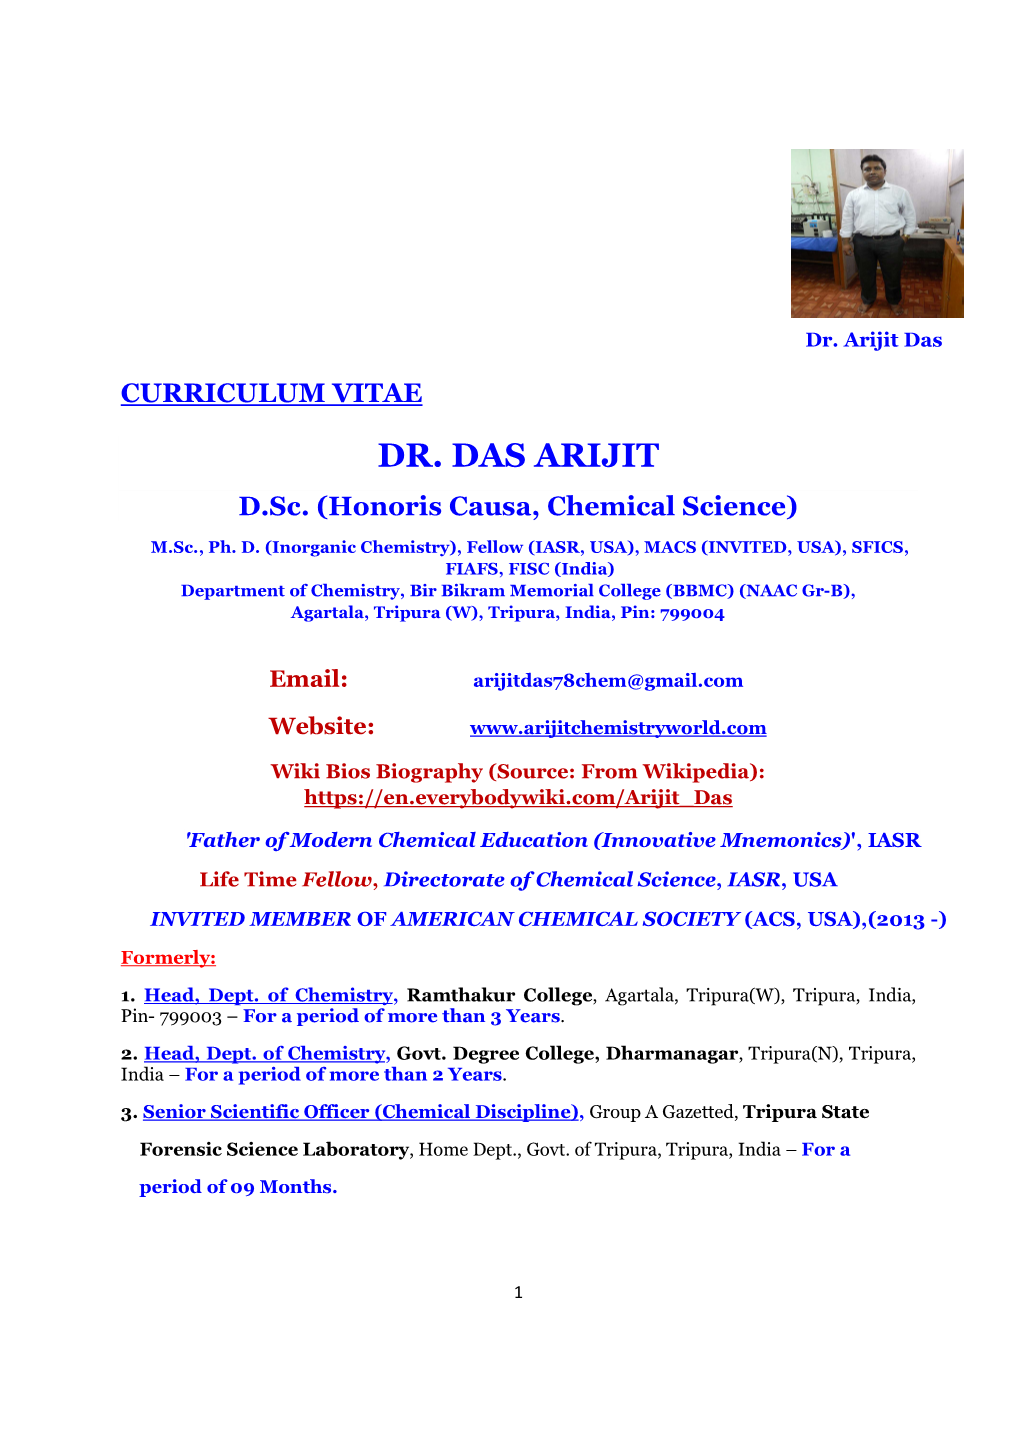 CV of Dr Arijit Das Updated on 01-12